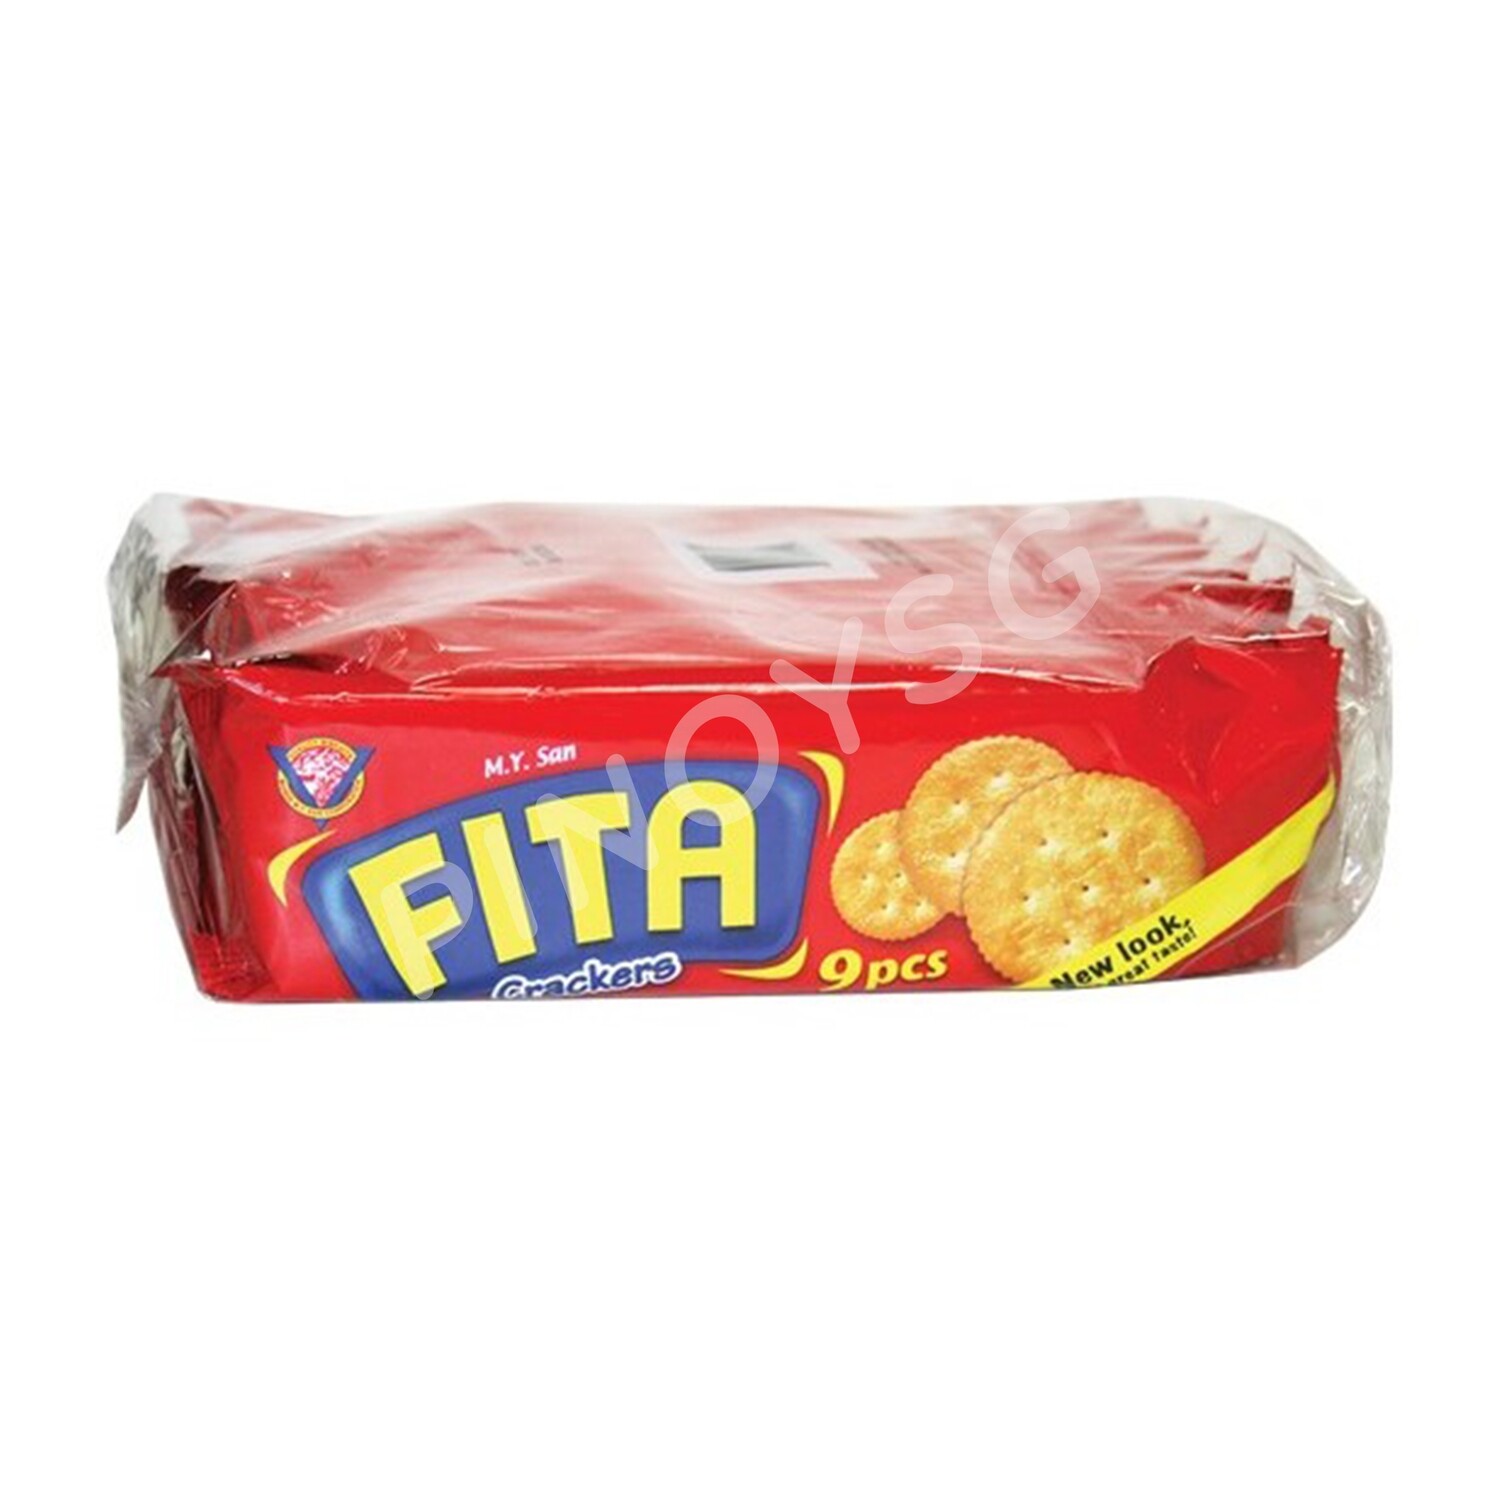 Fita Crackers (Singles) 10 x 30g